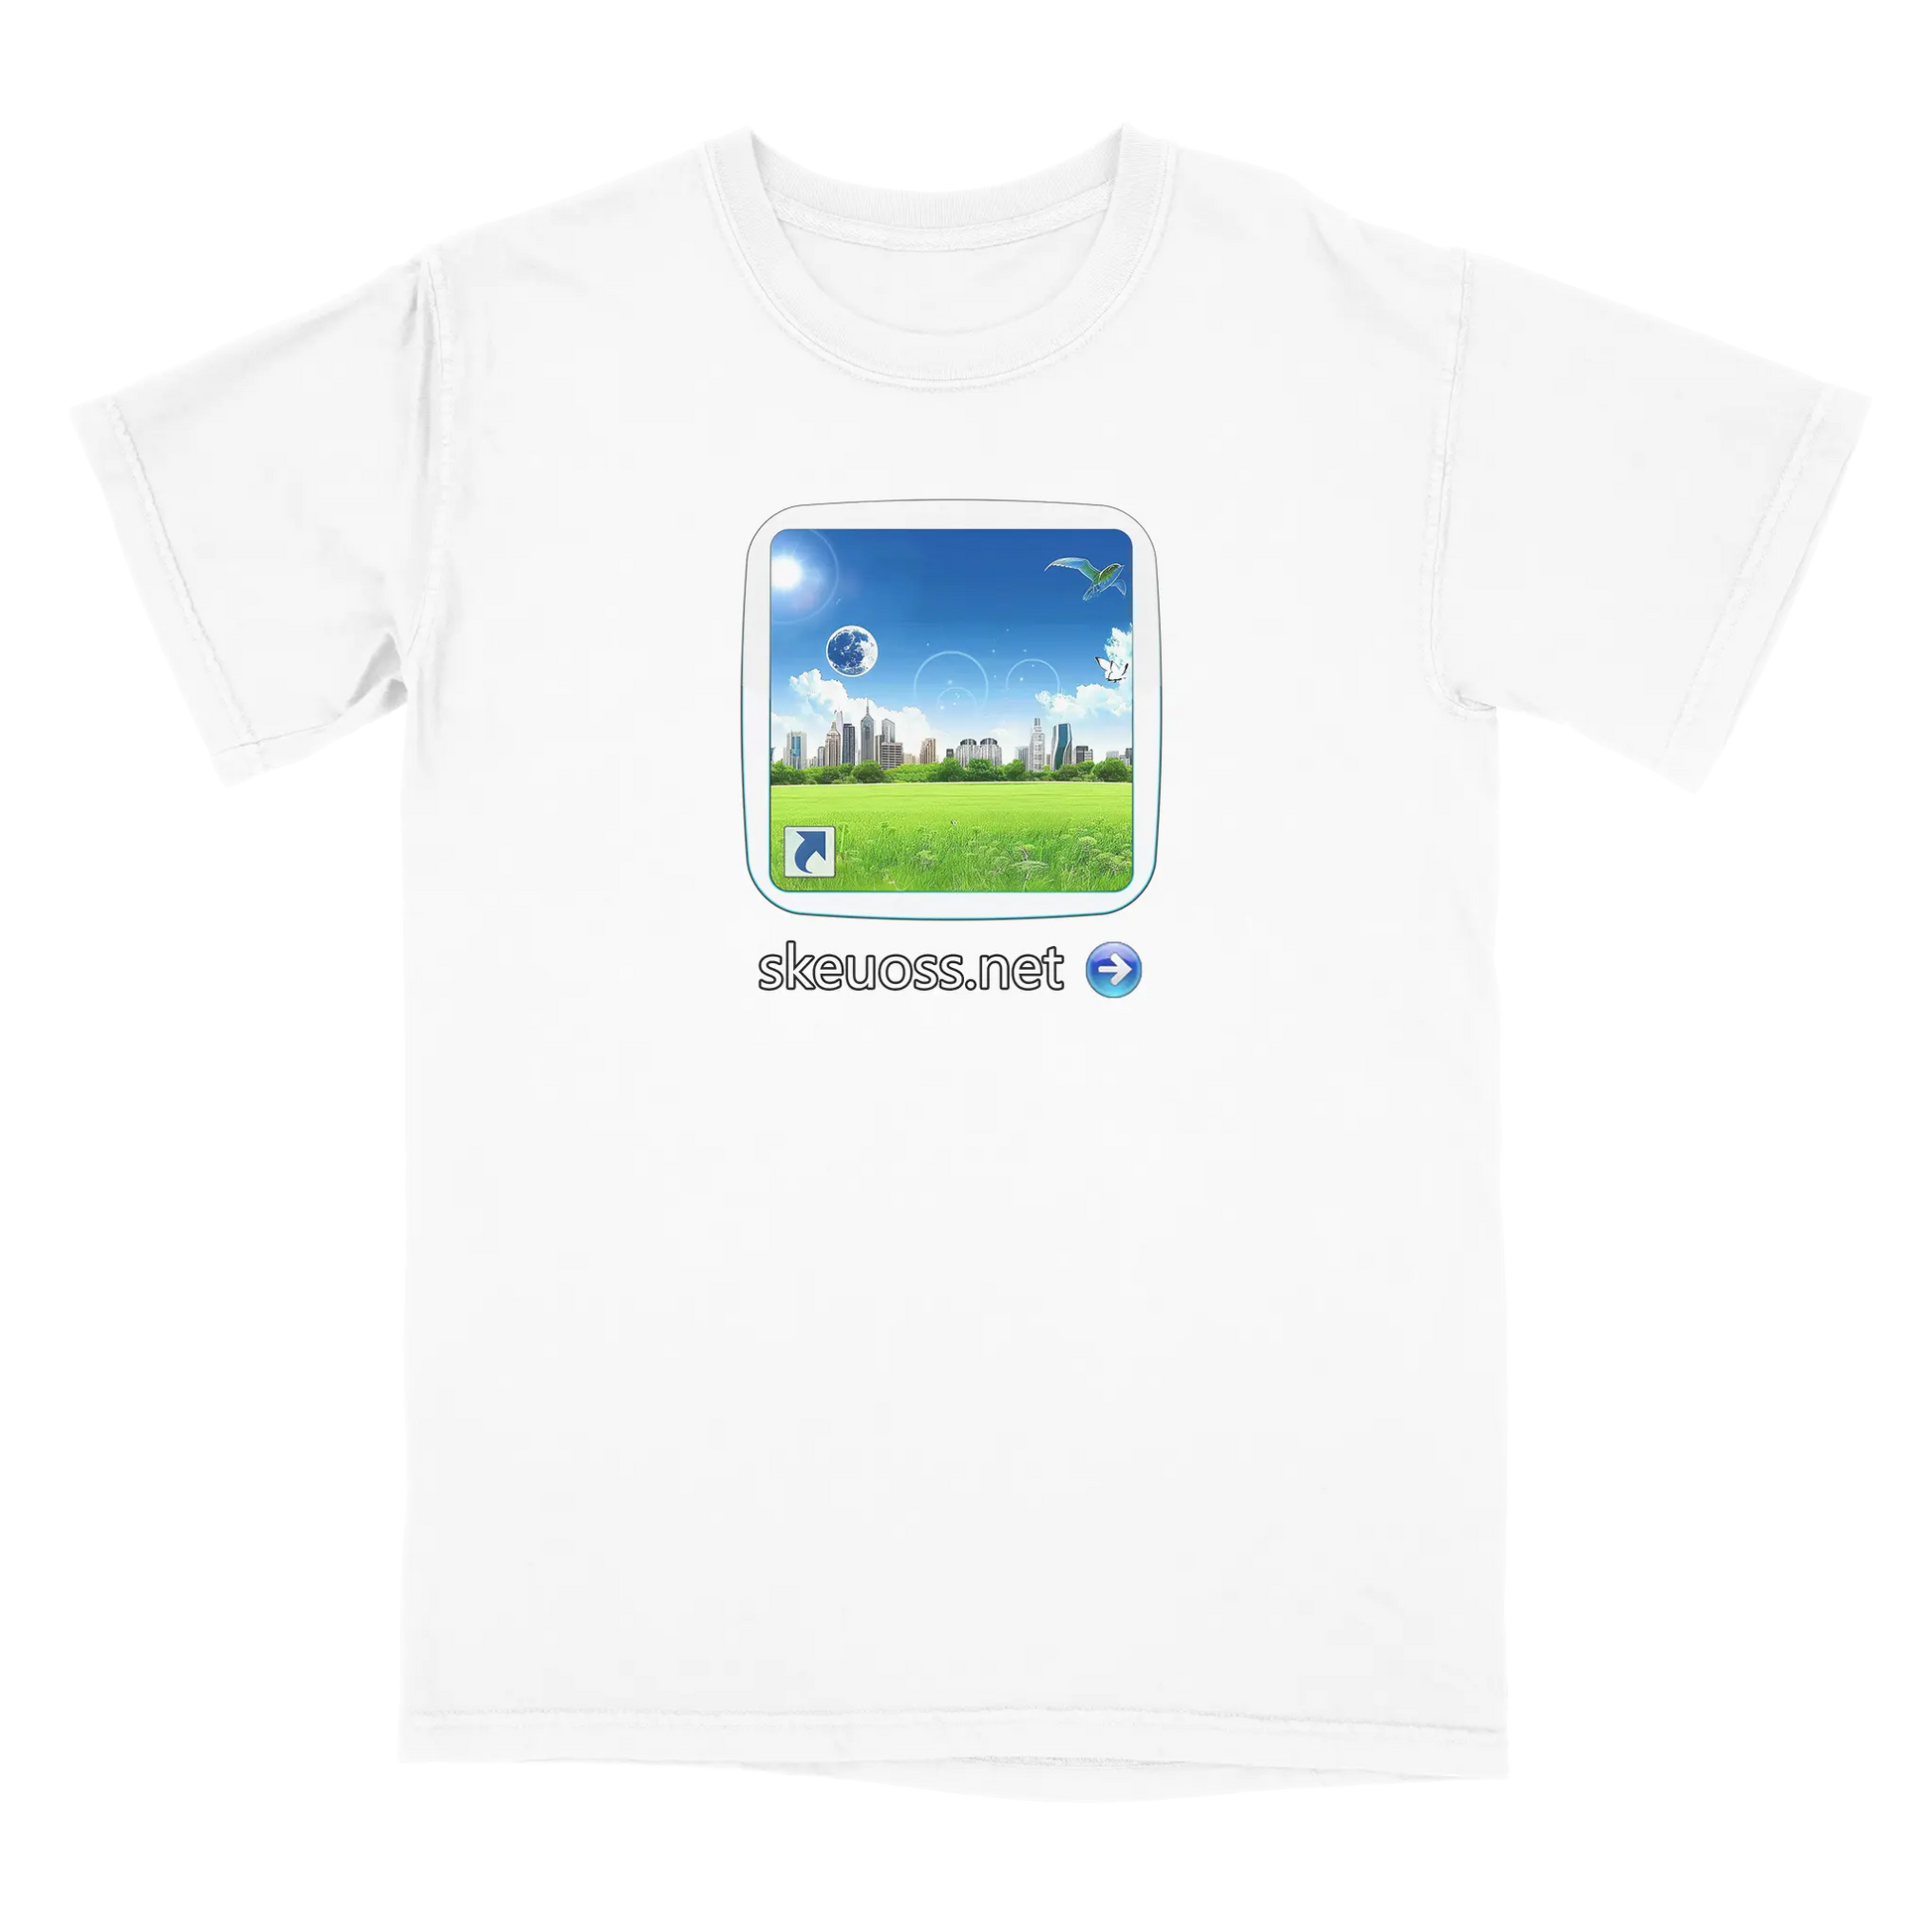 Frutiger Aero T-shirt - User Login Collection - User 353